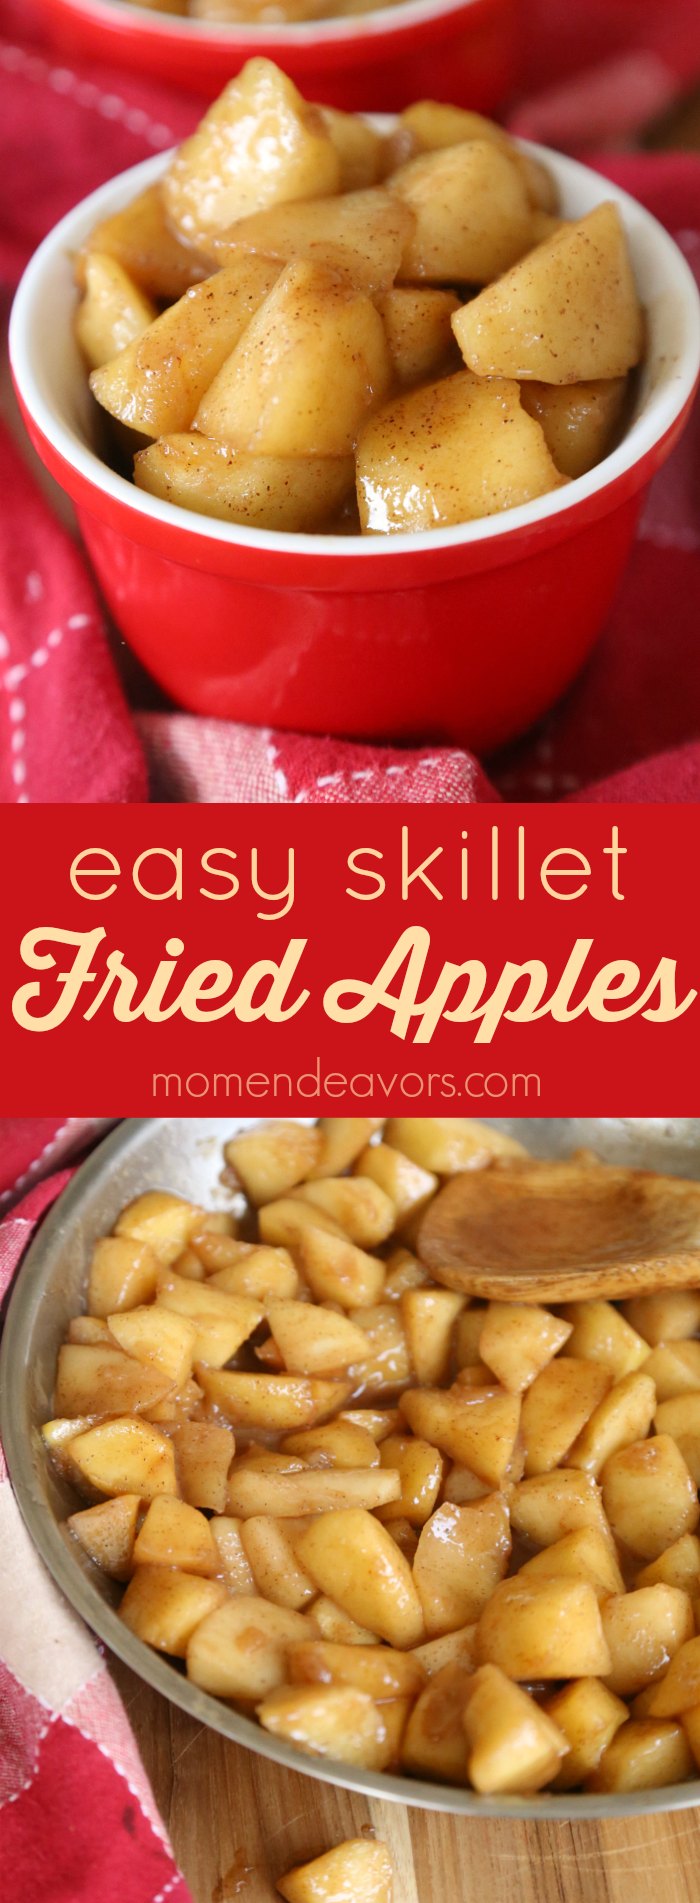 easy-skillet-fried-apples-recipe